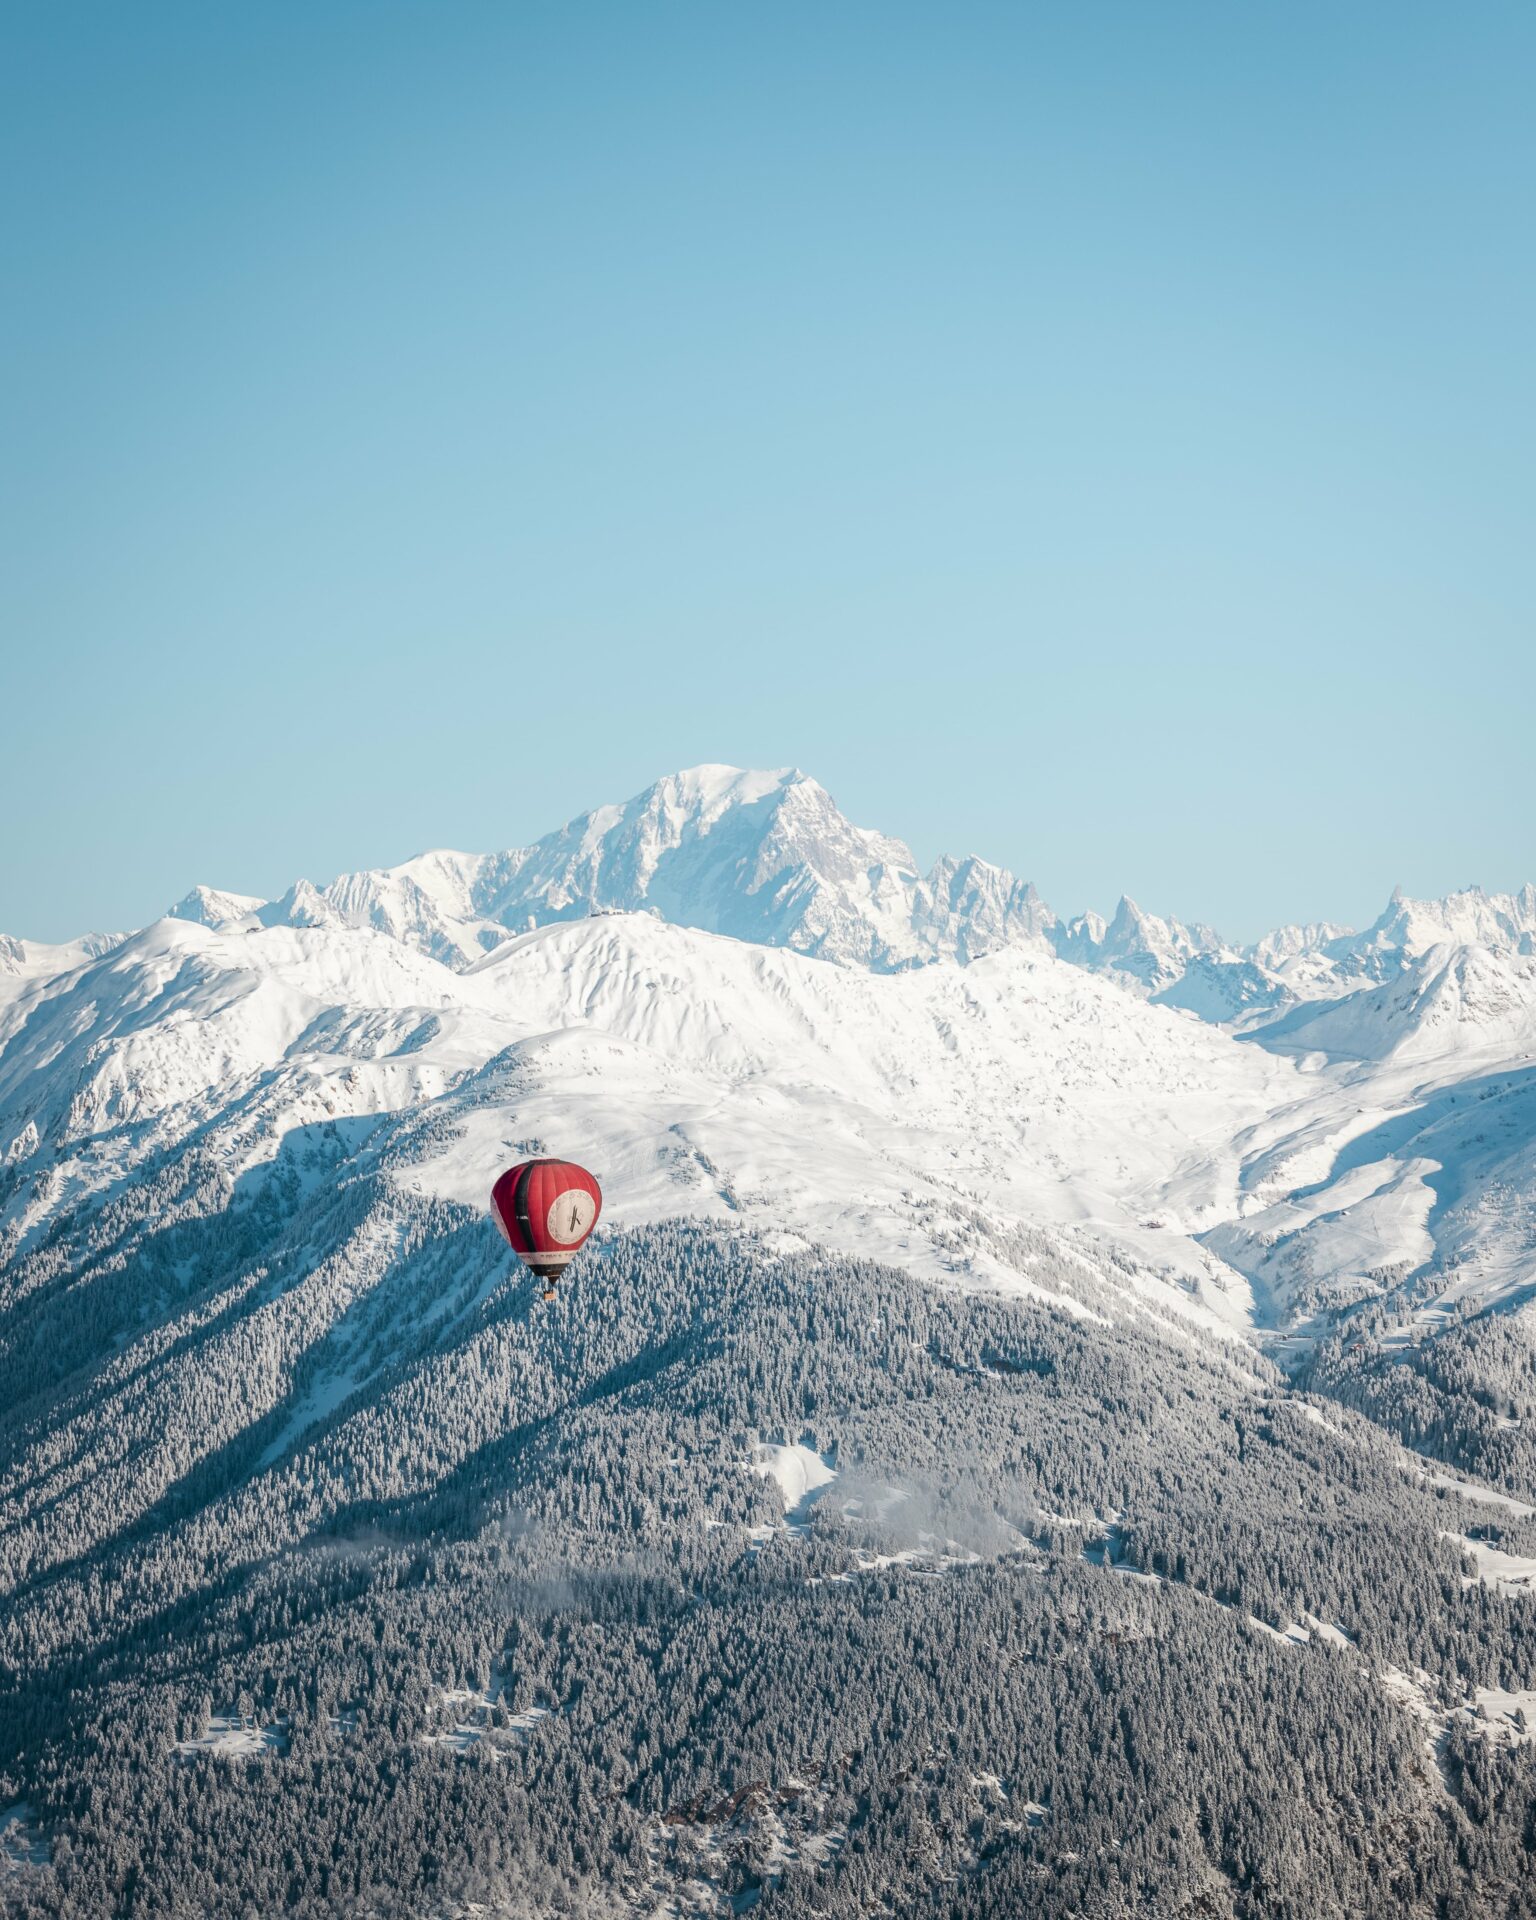 An image of a hot air balloon going over Courchevel